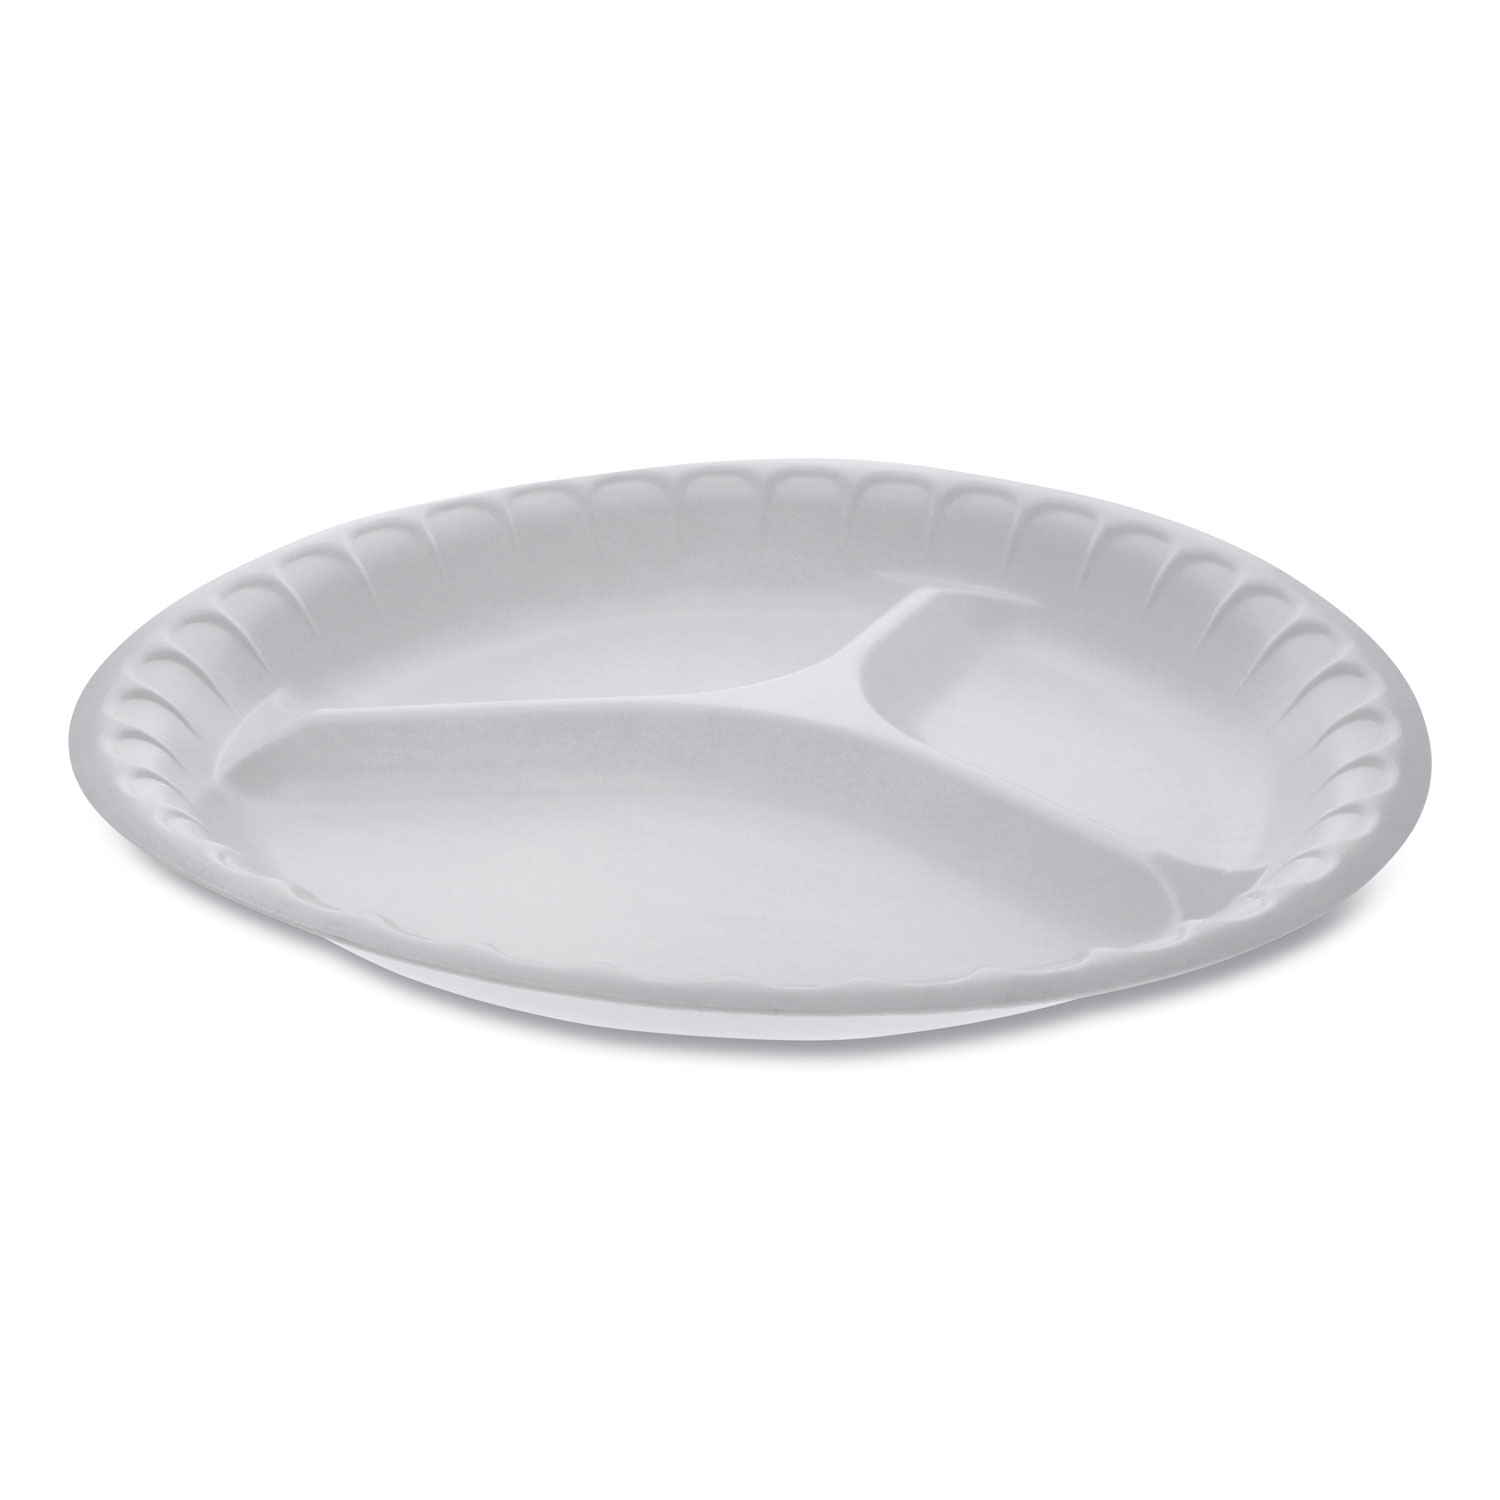  Pactiv 0TH10044000Y Unlaminated Foam Dinnerware, 3-Compartment Plate, 10.25 Diameter, White, 540/Carton (PCT0TH10044000Y) 